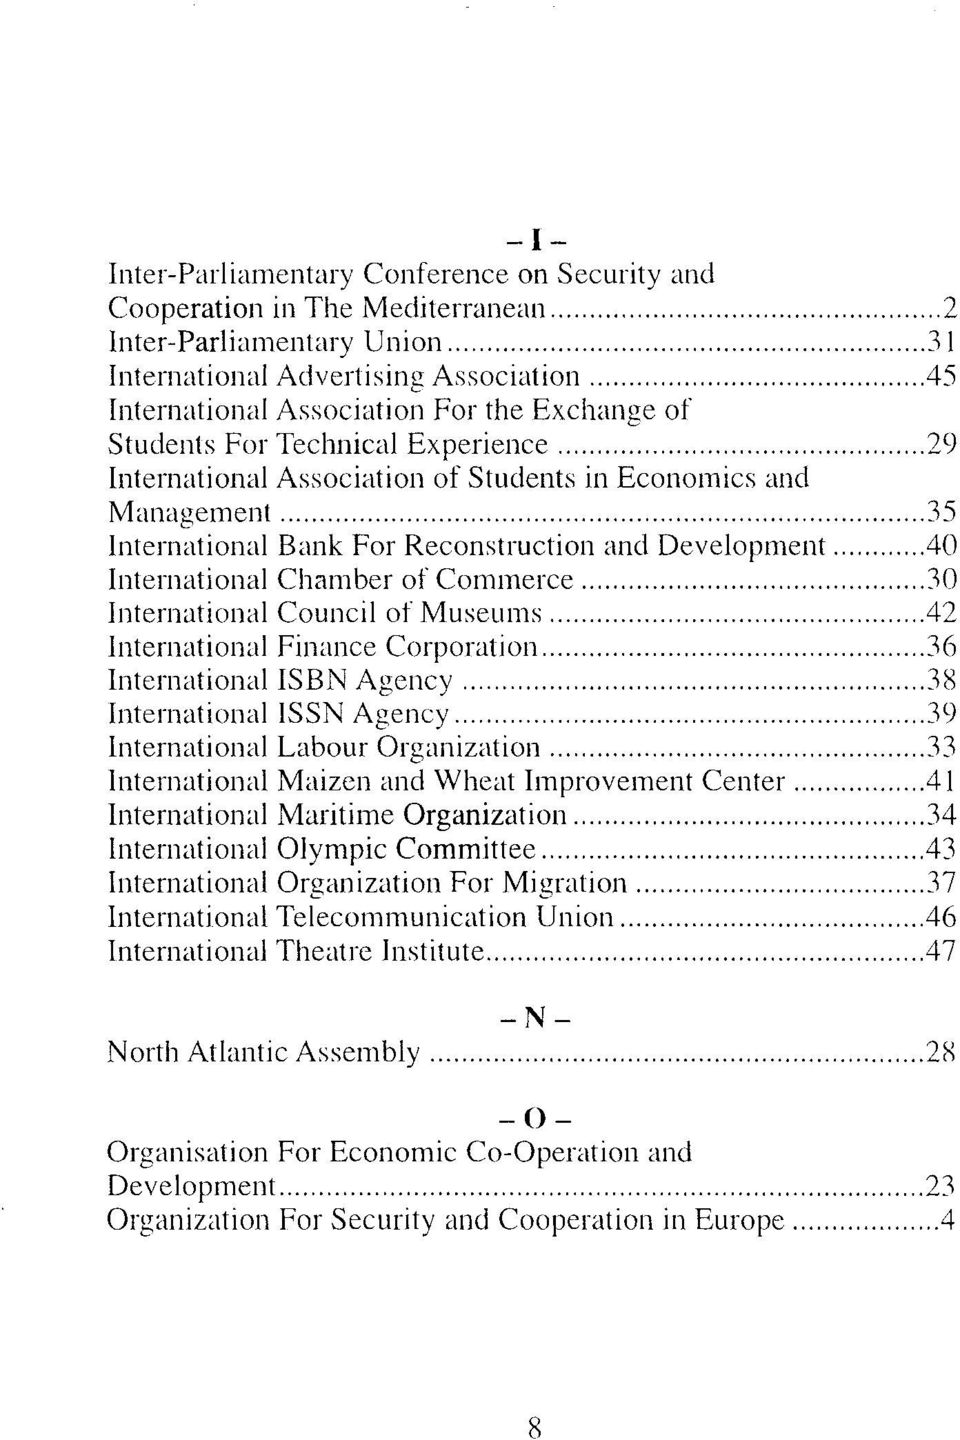 Commerce 30 International Council of Museums 42 International Finance Corporation 36 International ISBN Agency 38 International ISSN Agency 39 International Labour Organization 33 International